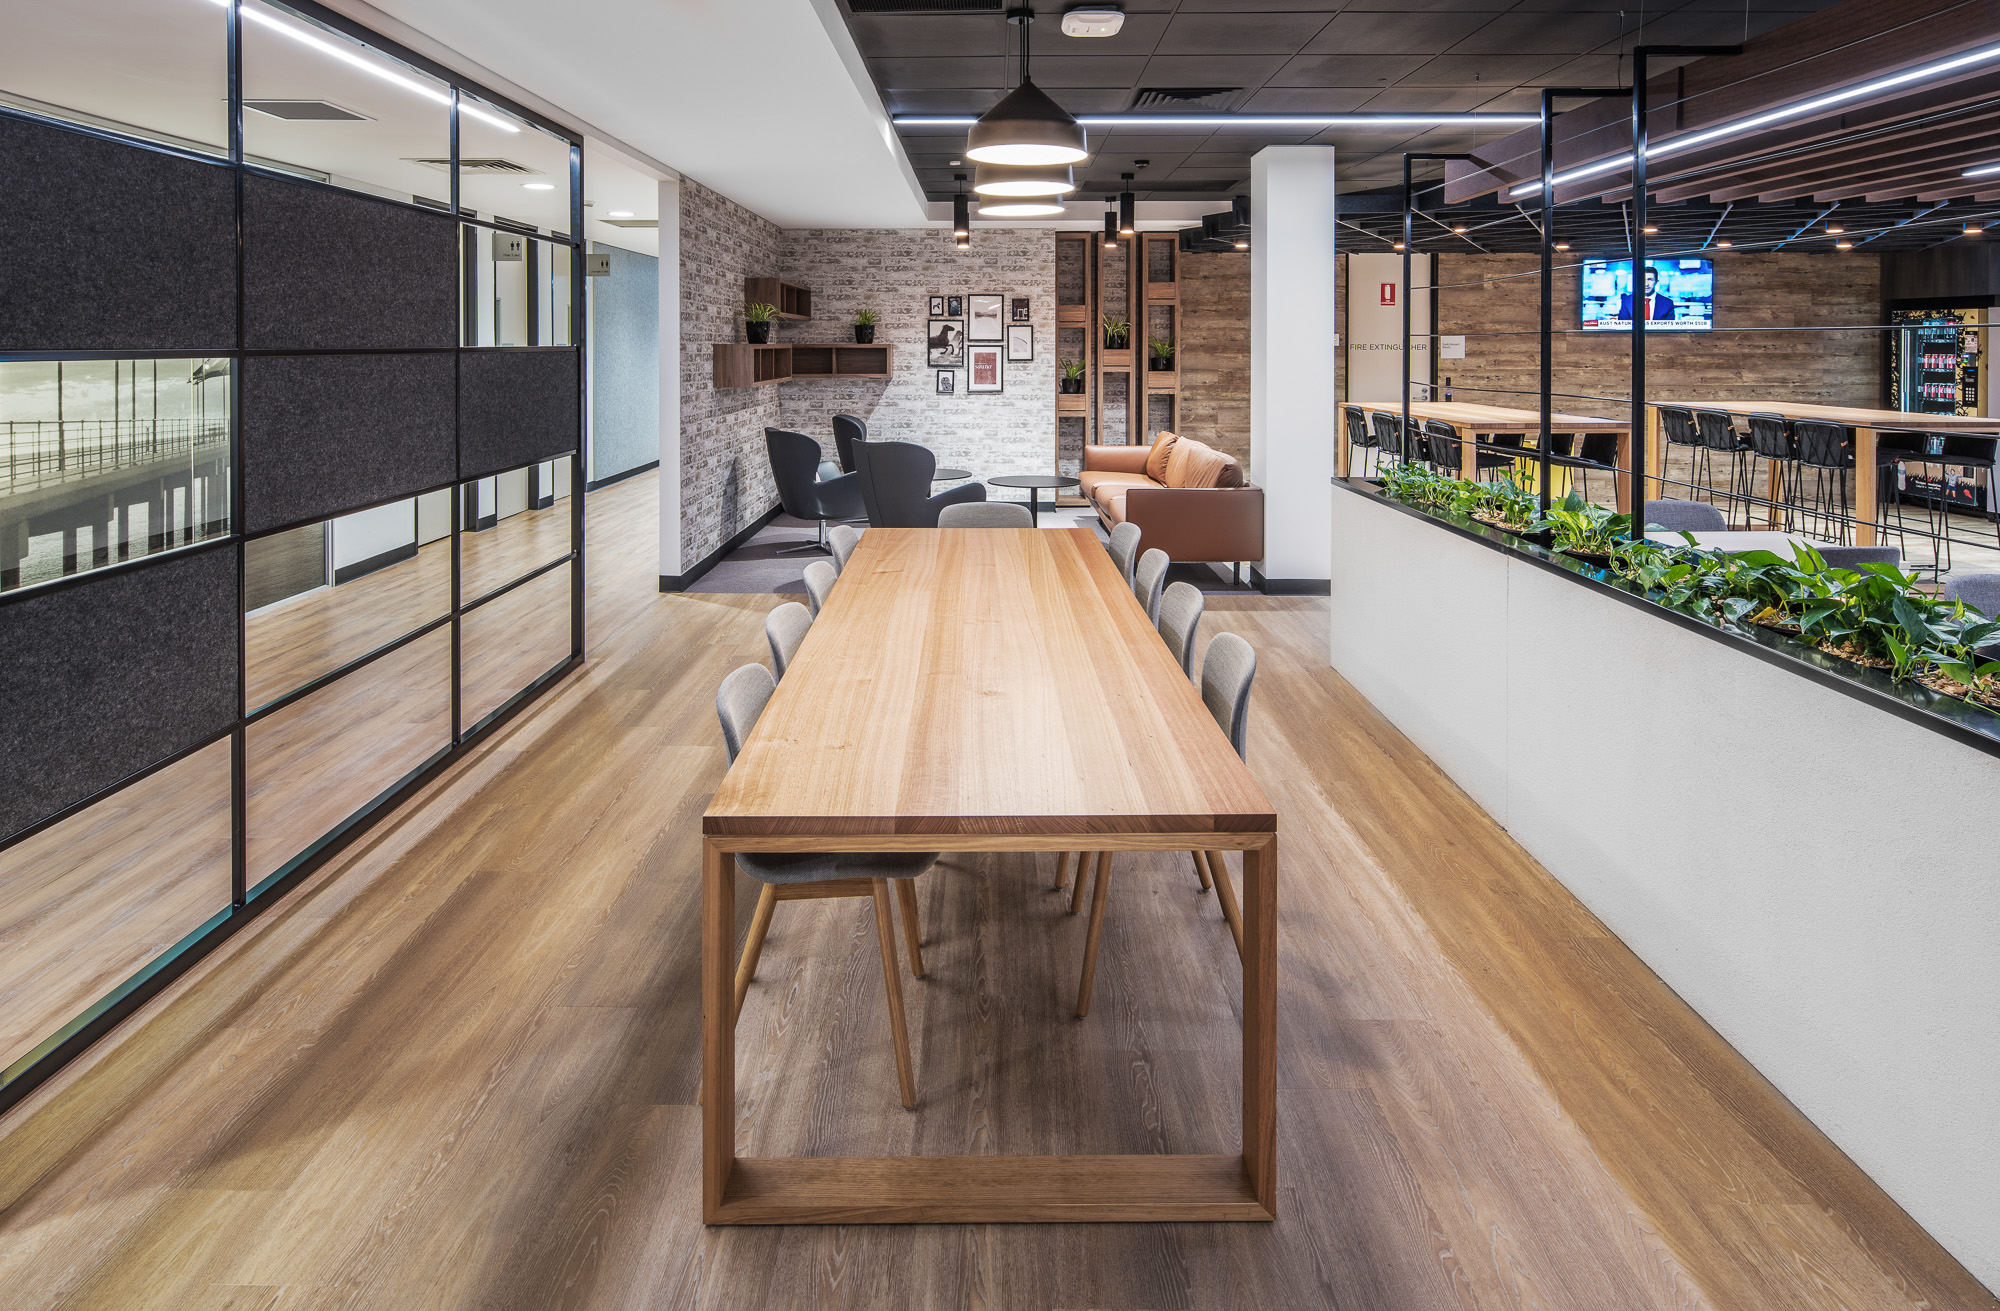 Corporate cafe designed by Hodgkison Interior Design Adelaide